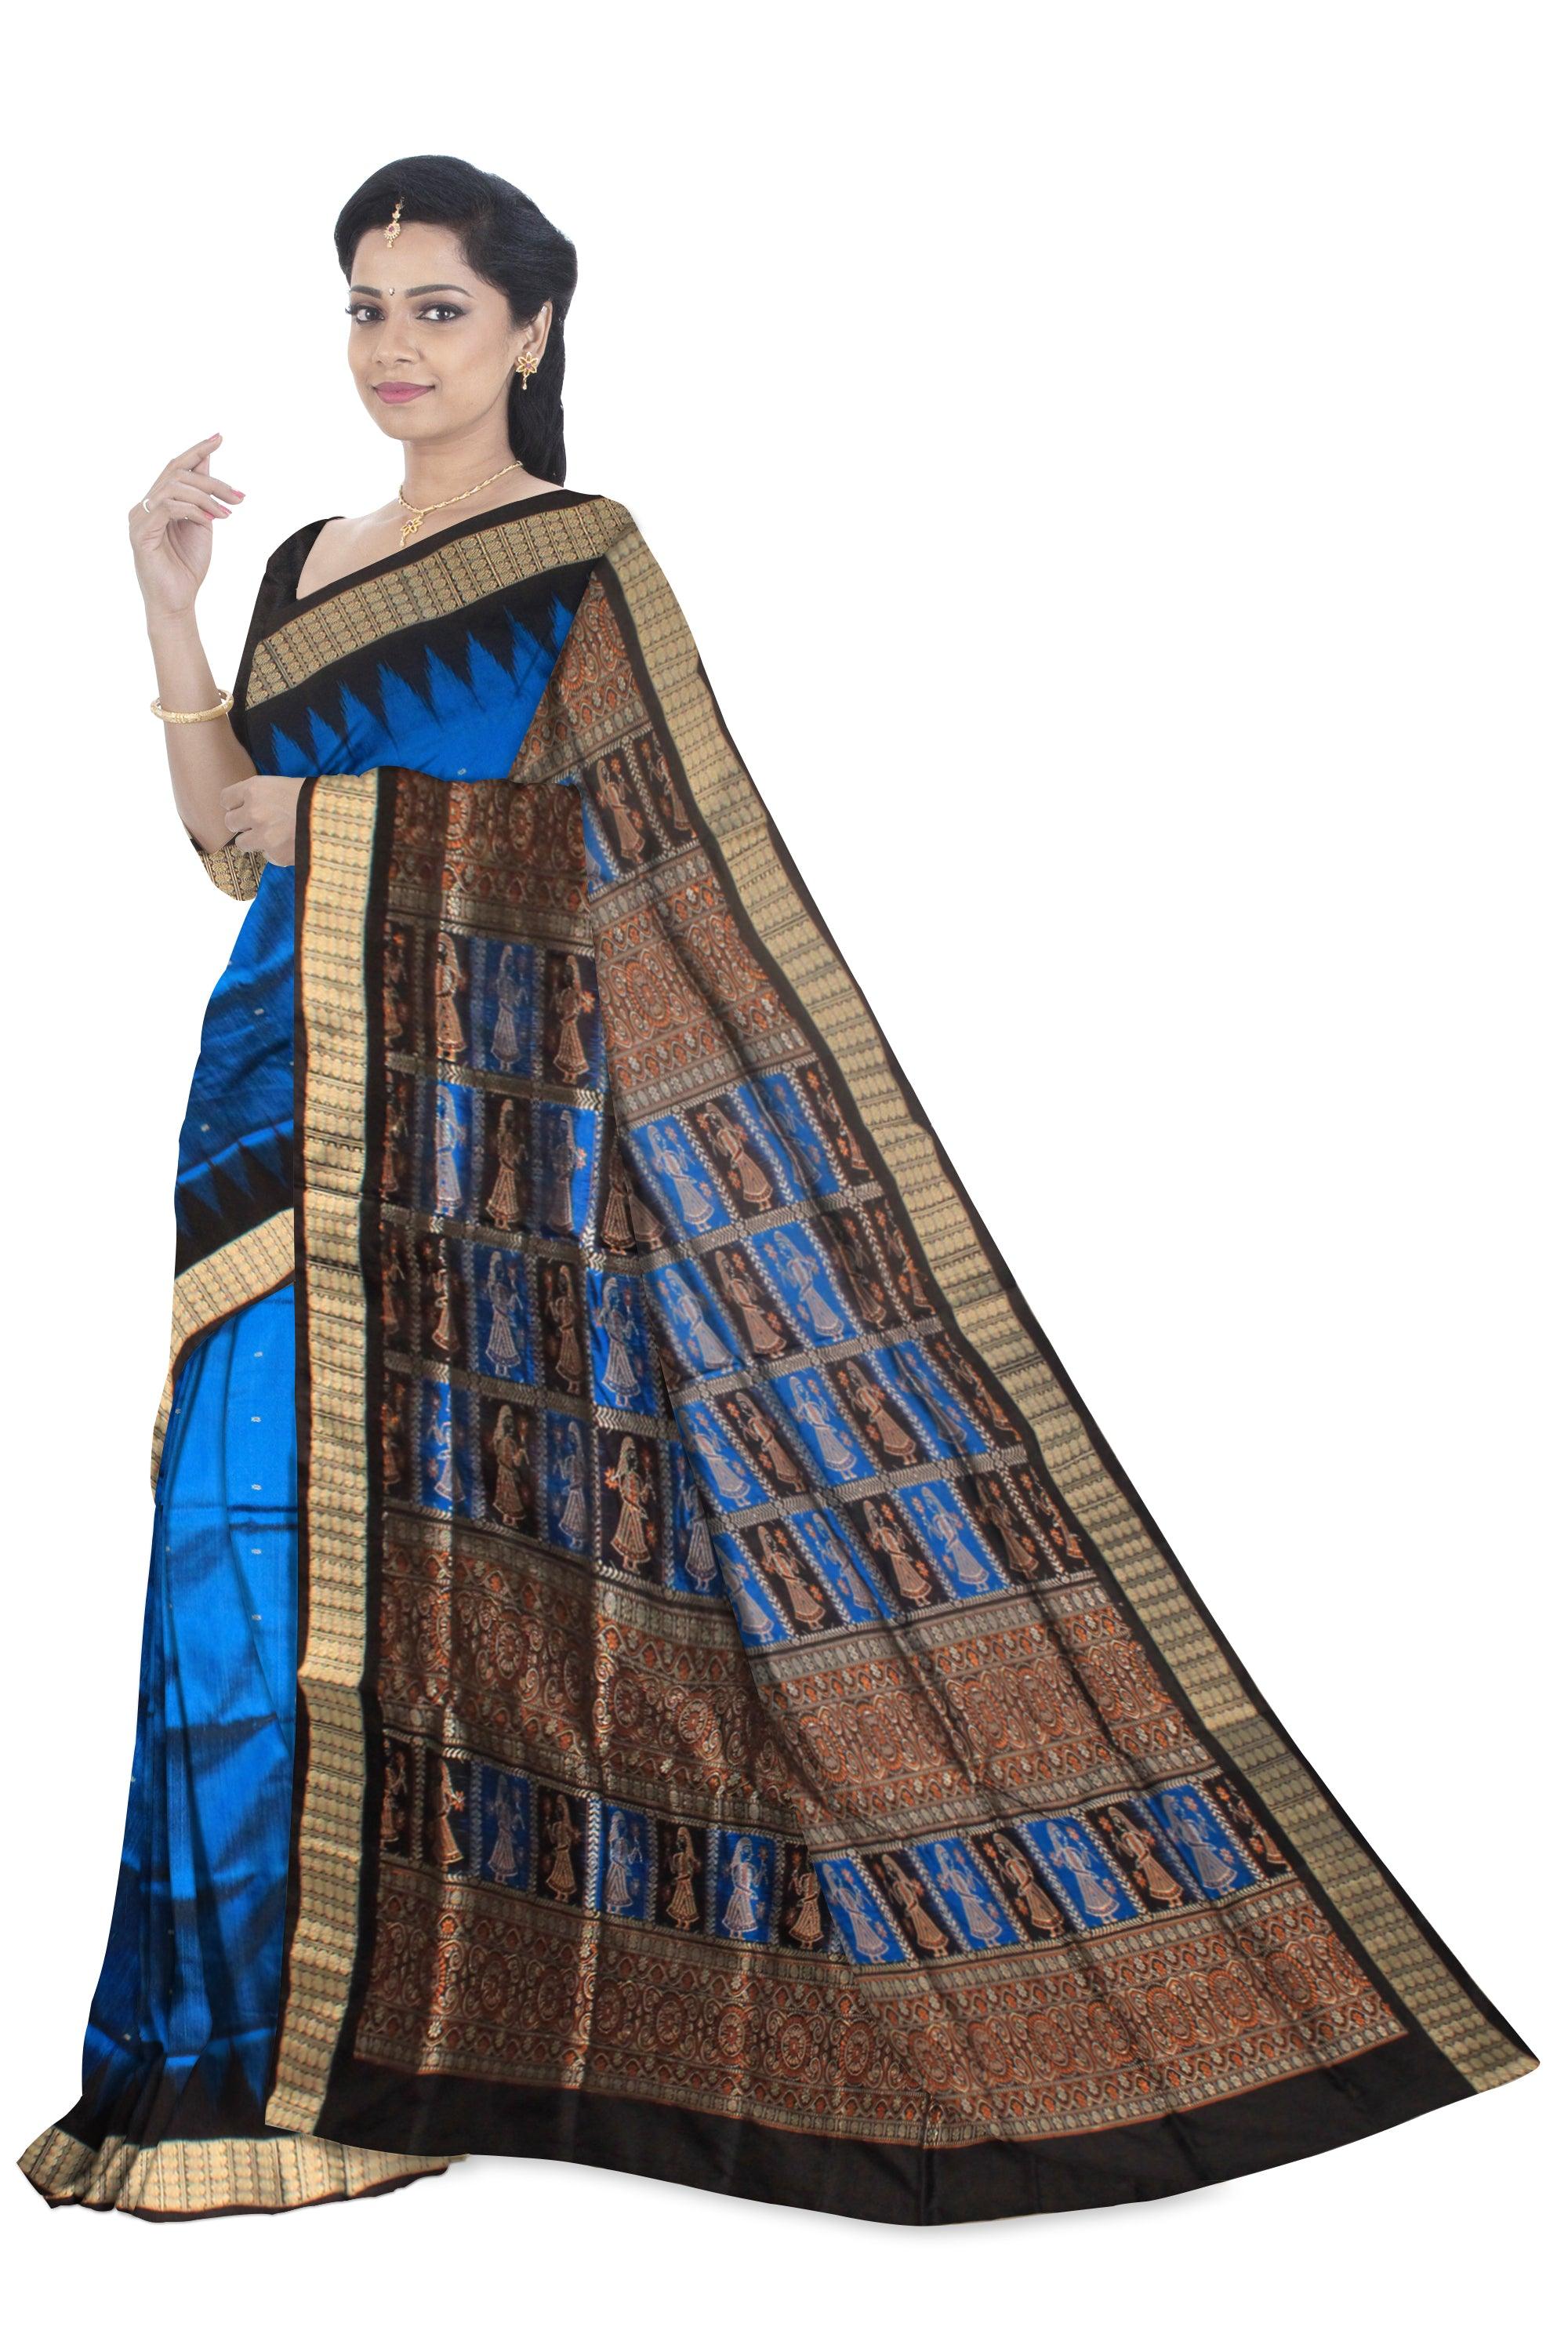 SONEPUR DOLL PRINT PATA SAREE IN BLUE AND BLACK COLOR - Koshali Arts & Crafts Enterprise